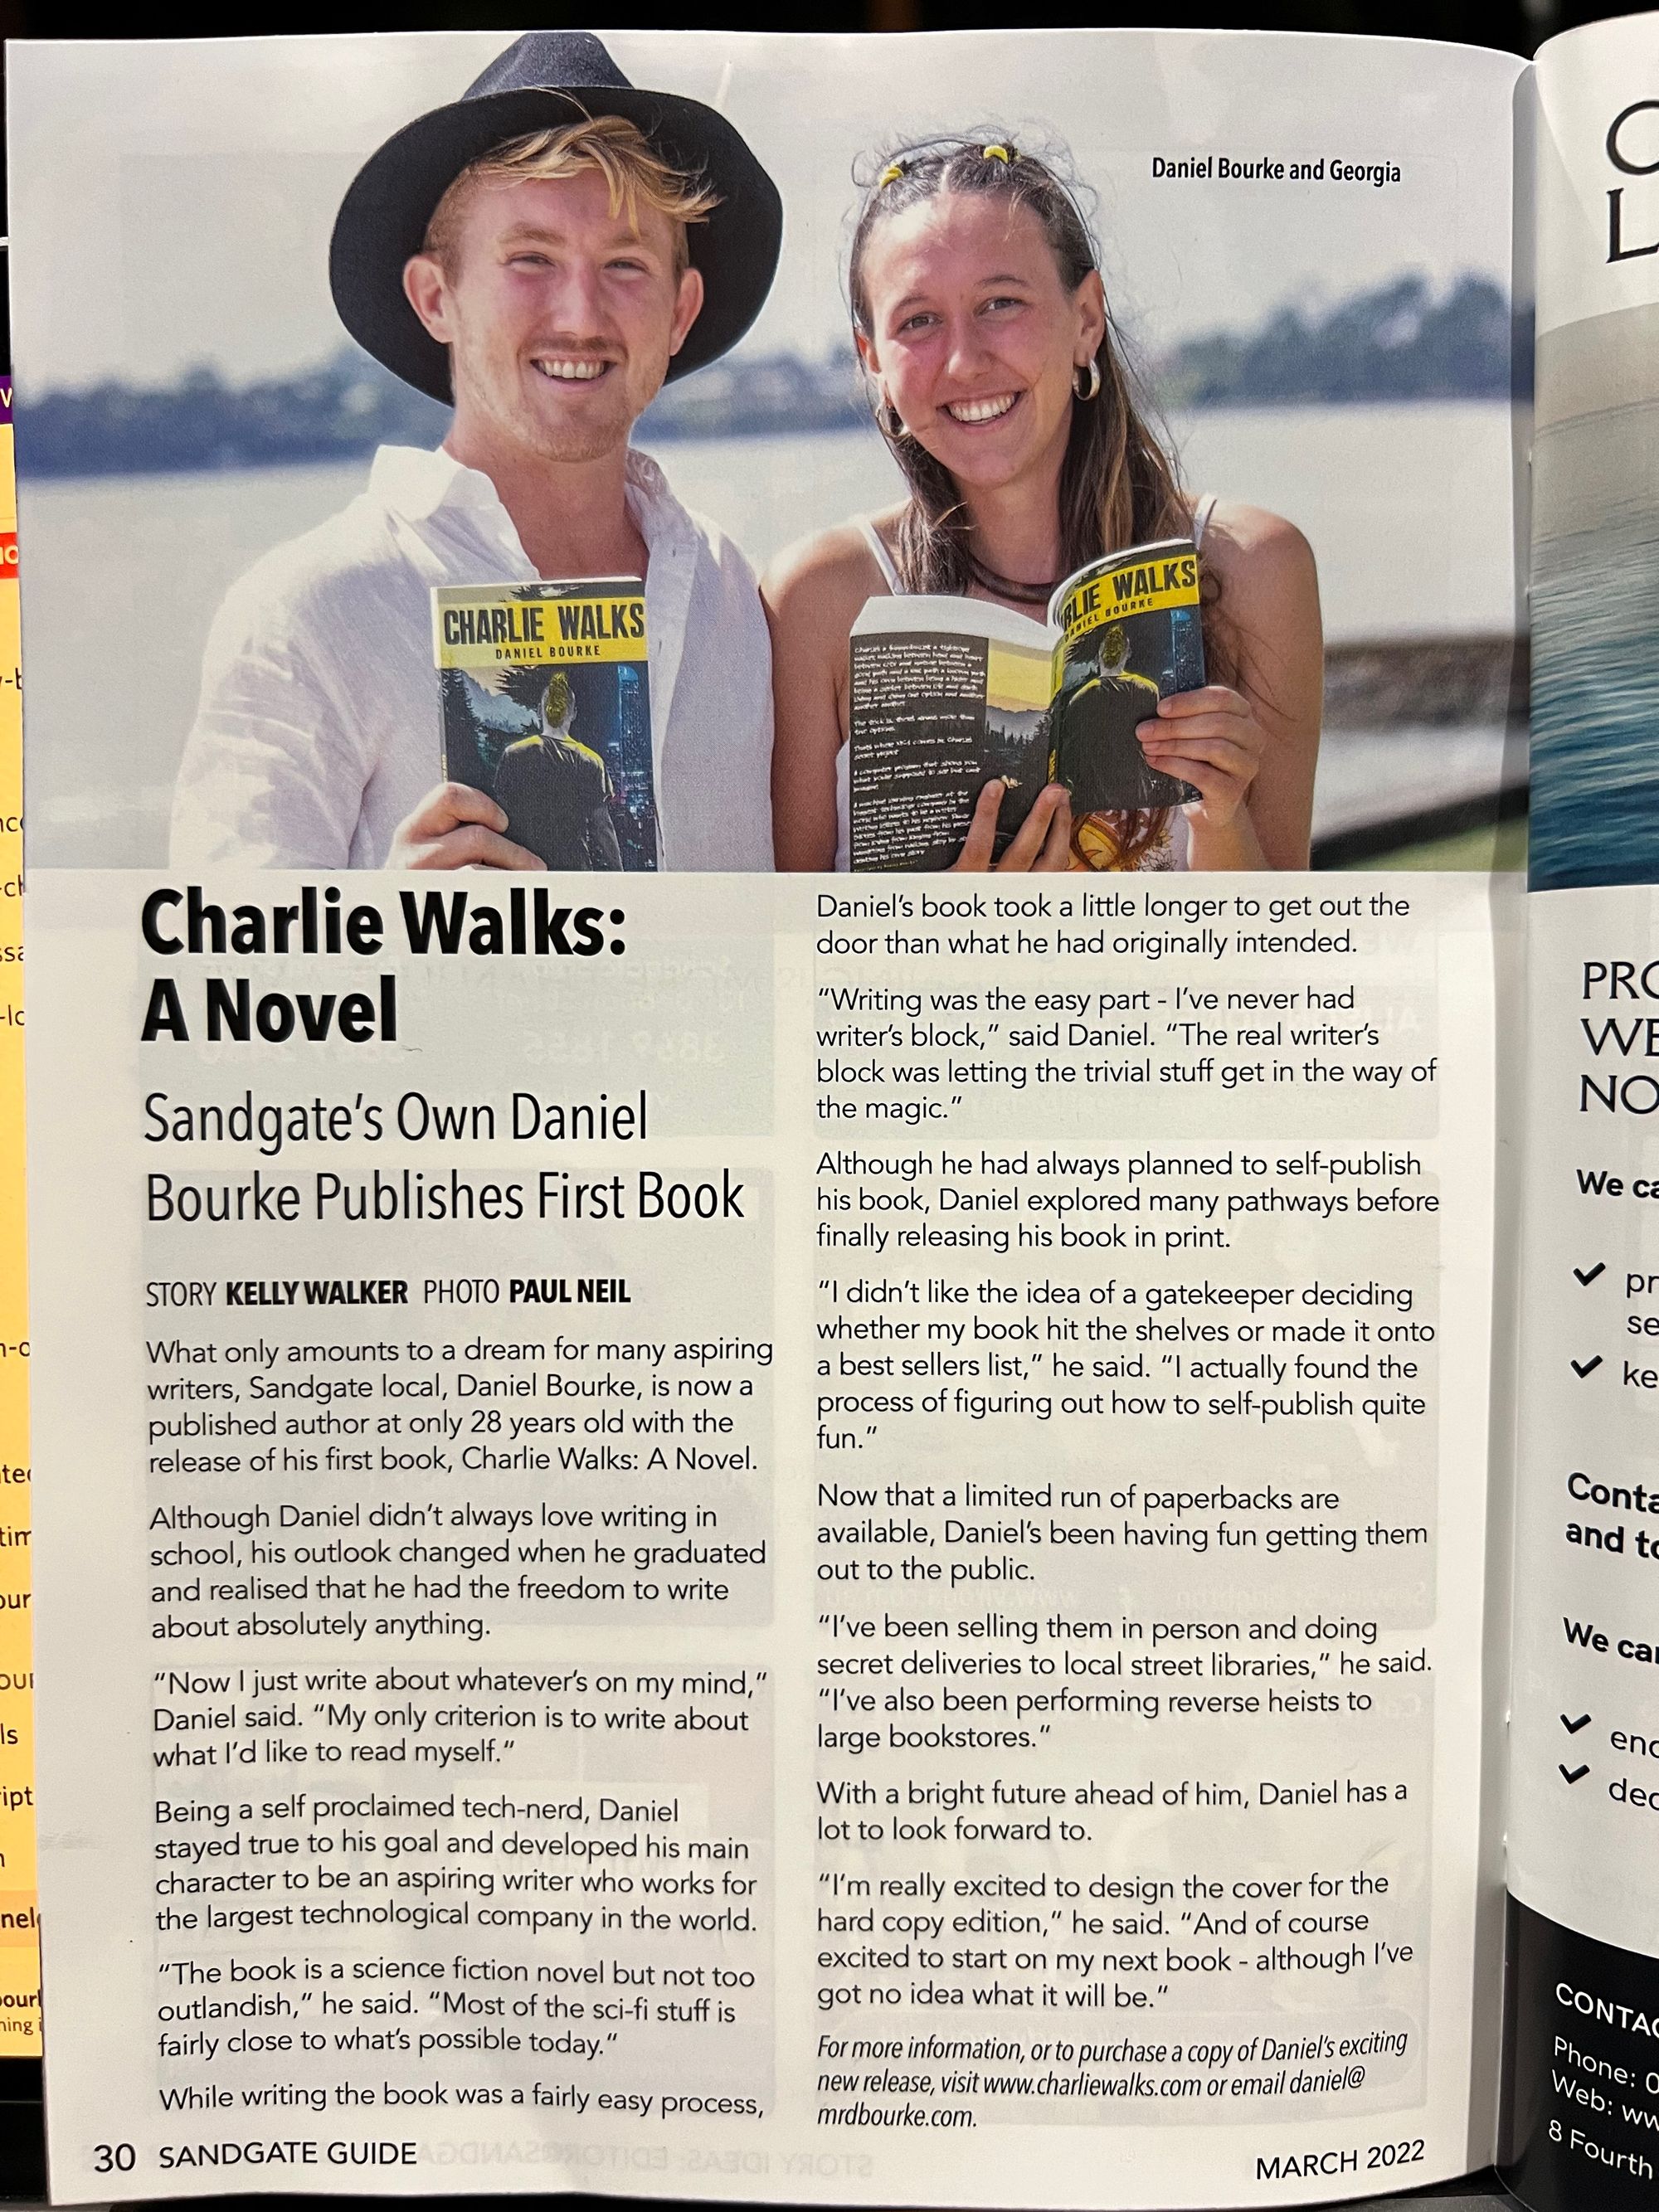 Article on Charlie Walks by Daniel Bourke in Sandgate Guide